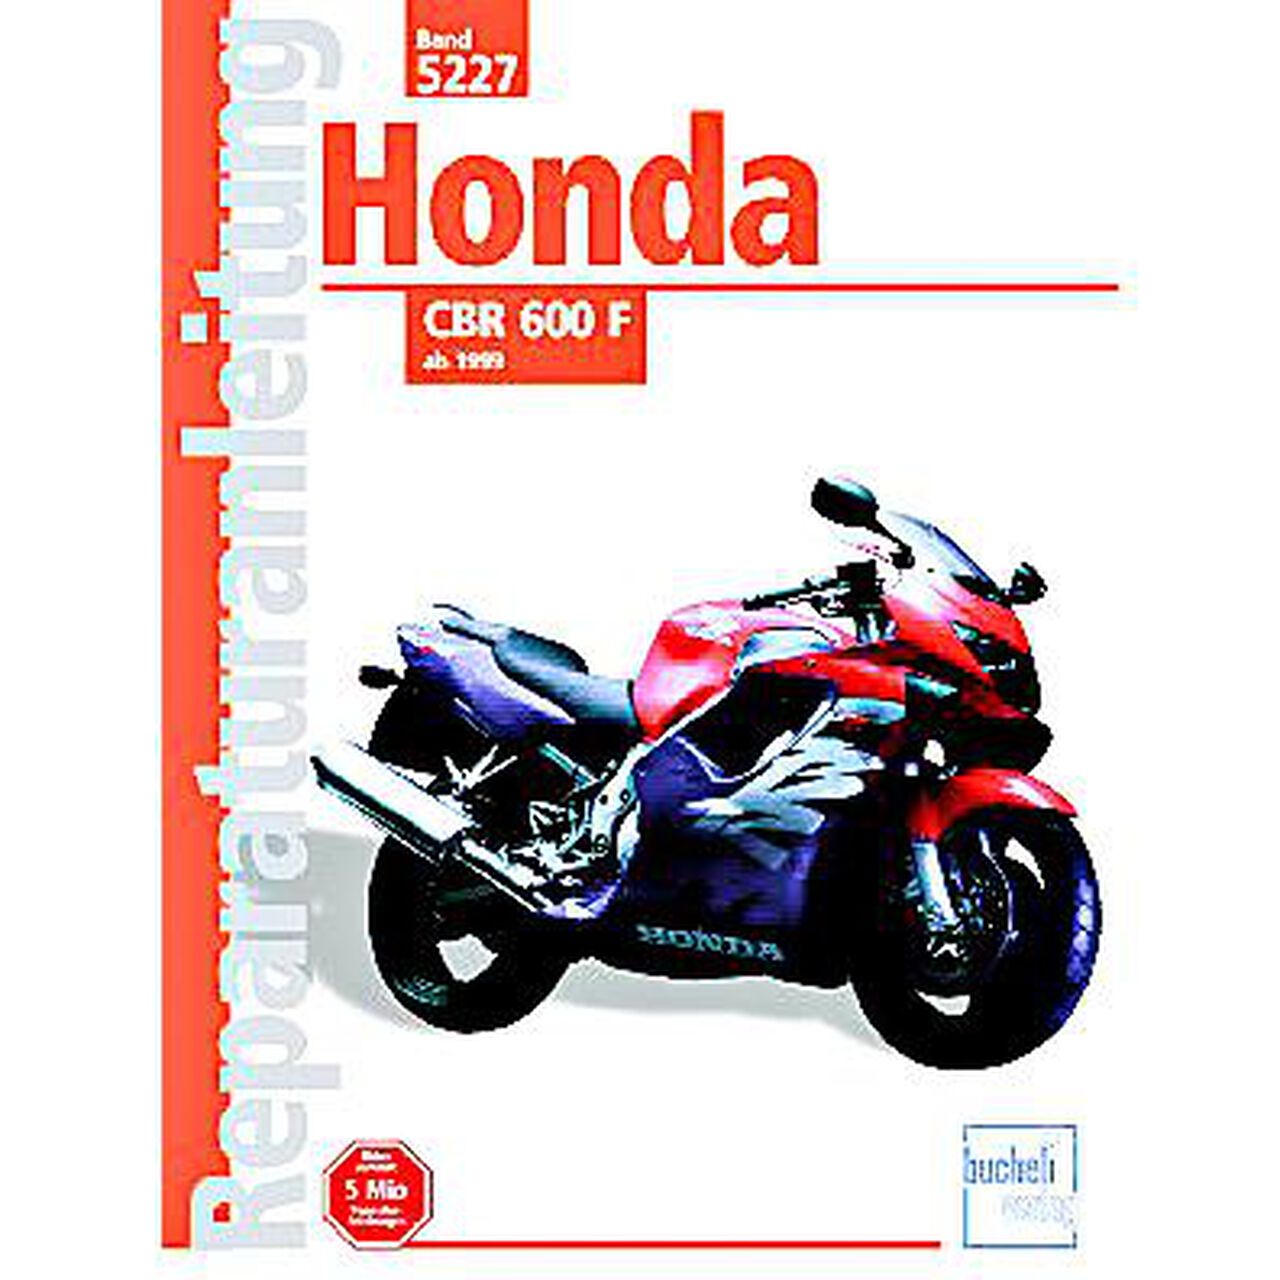 repair manual german Bucheli Honda CBR 600 F 1999 to 2000